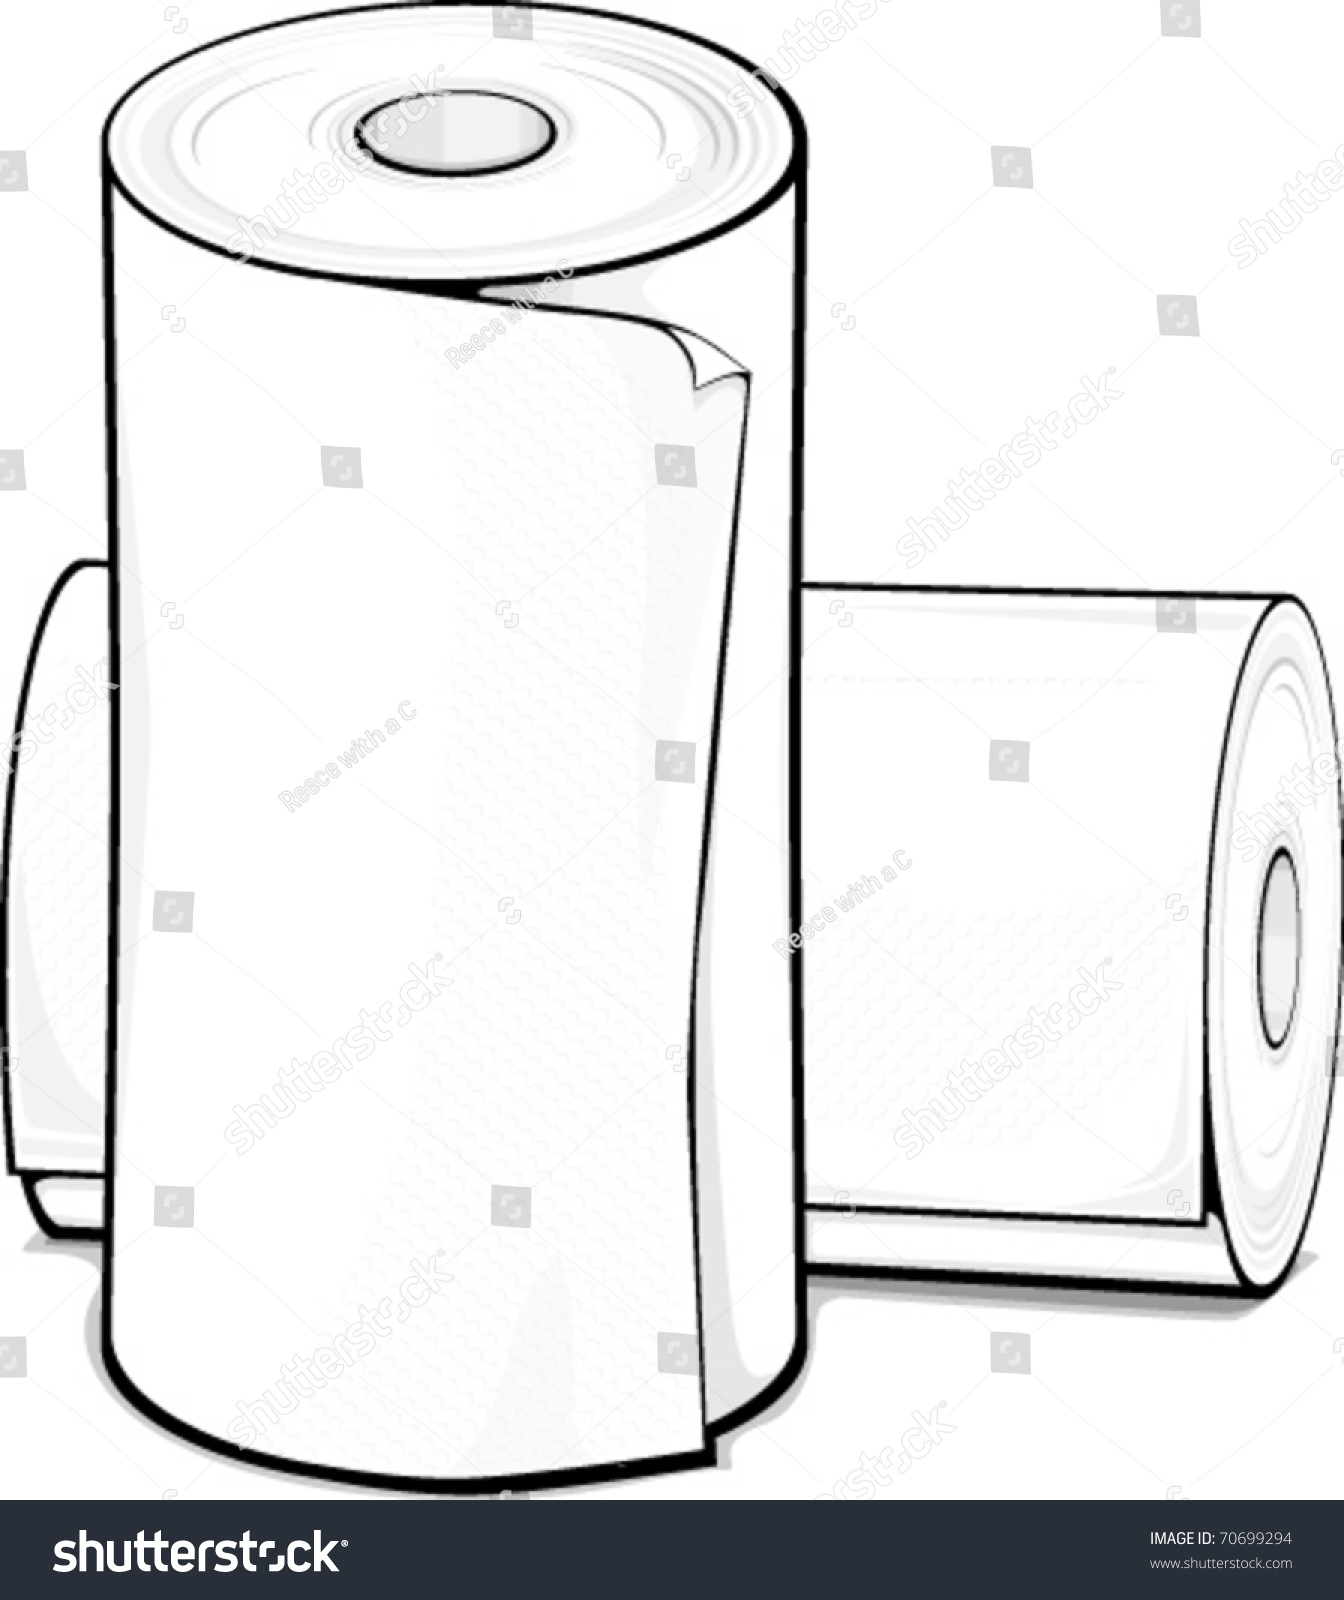 clipart paper towels - photo #34